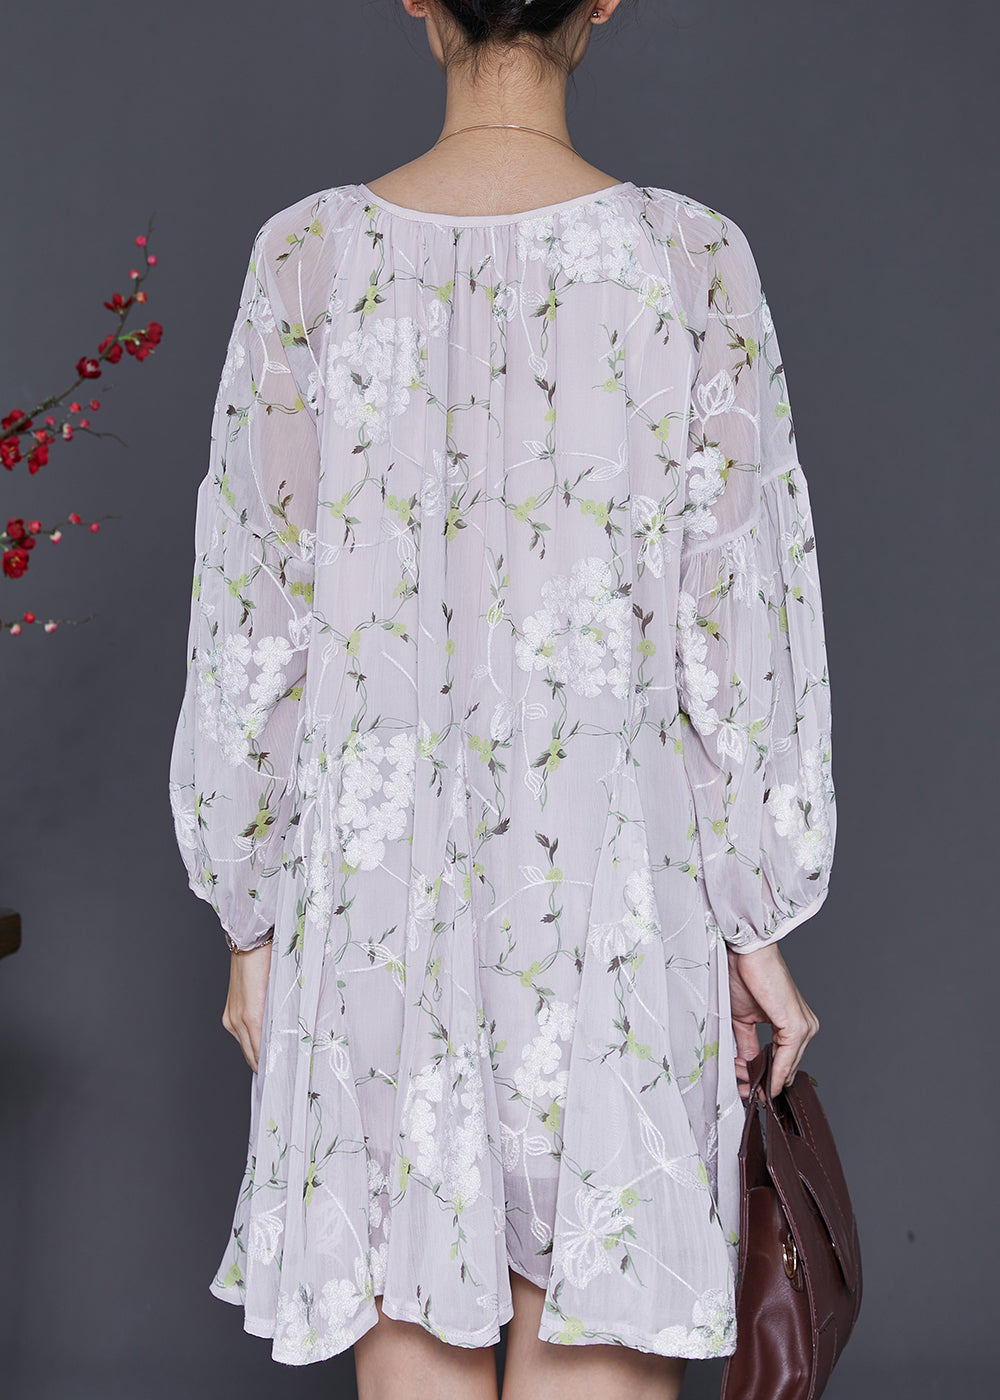 Modern Grey Print Lace Up Chiffon Mini Dress Spring